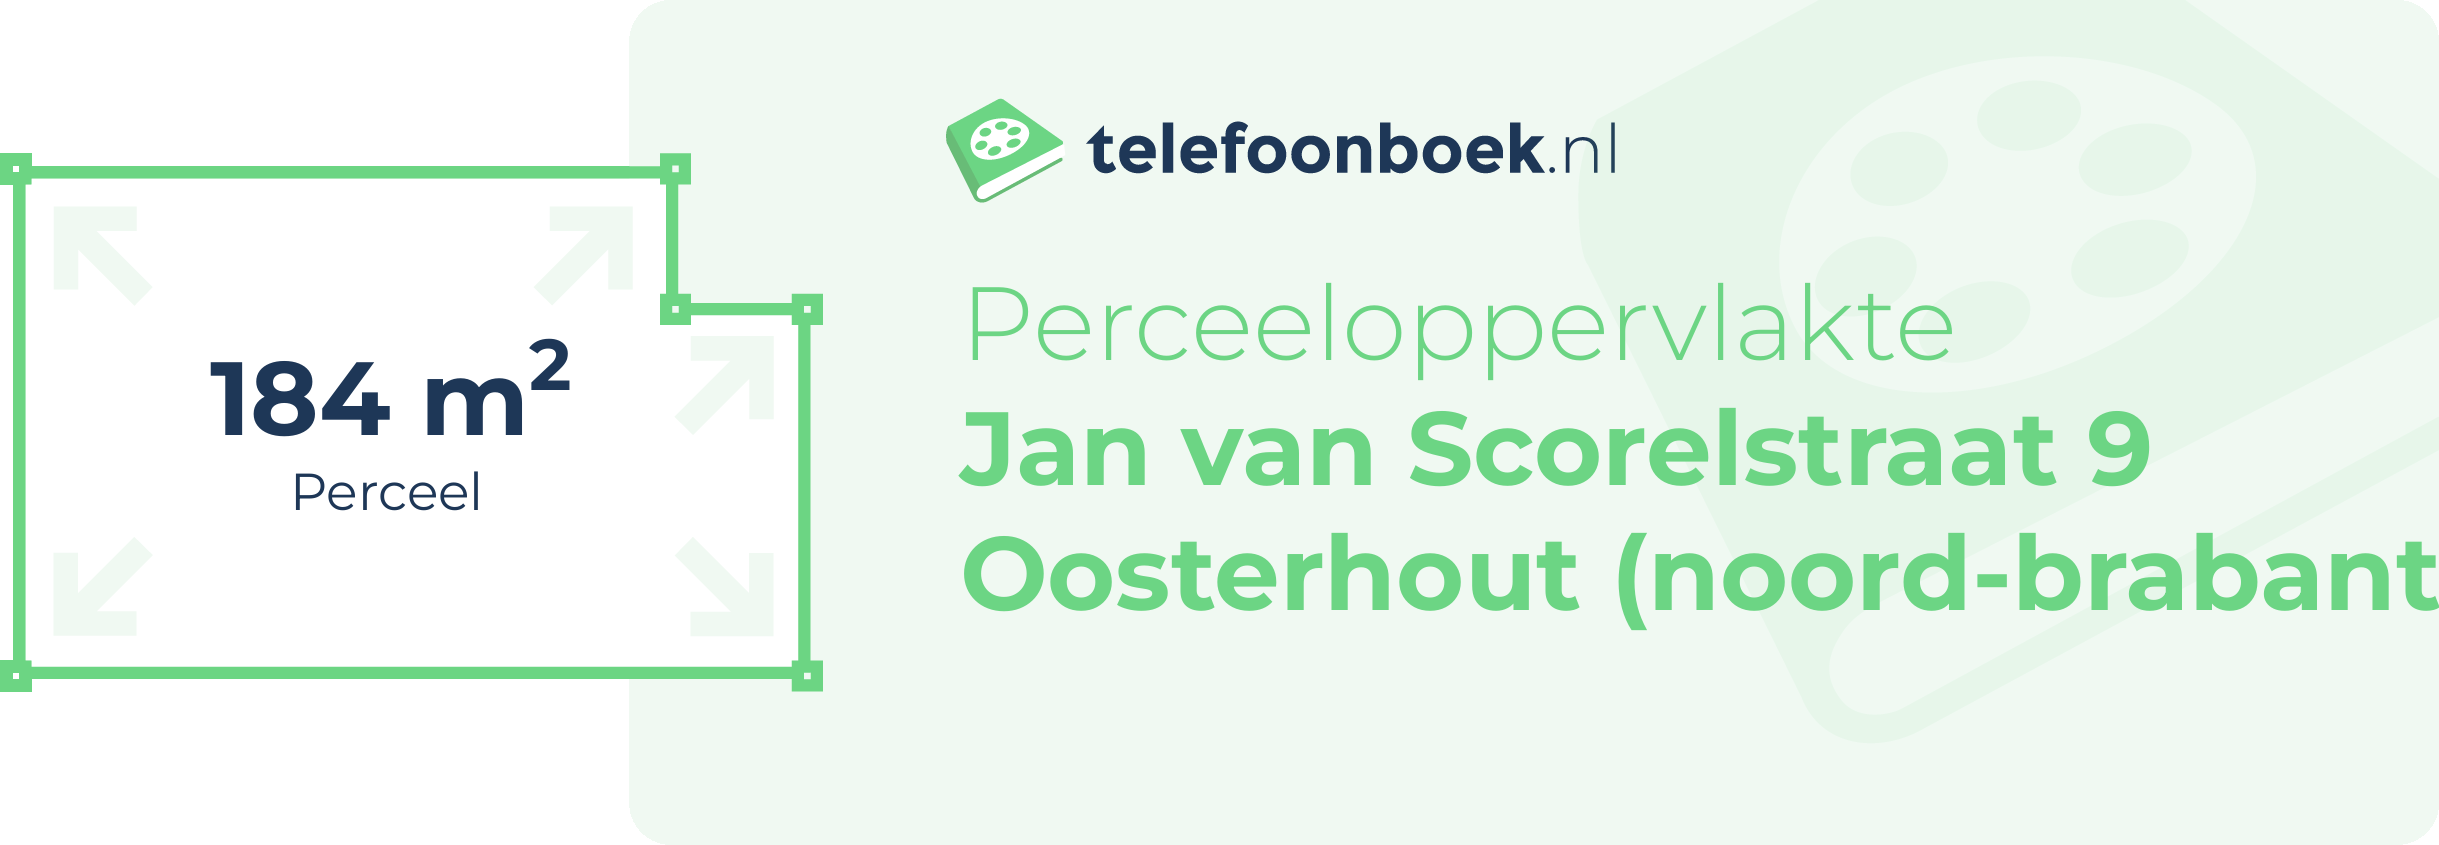 Perceeloppervlakte Jan Van Scorelstraat 9 Oosterhout (Noord-Brabant)